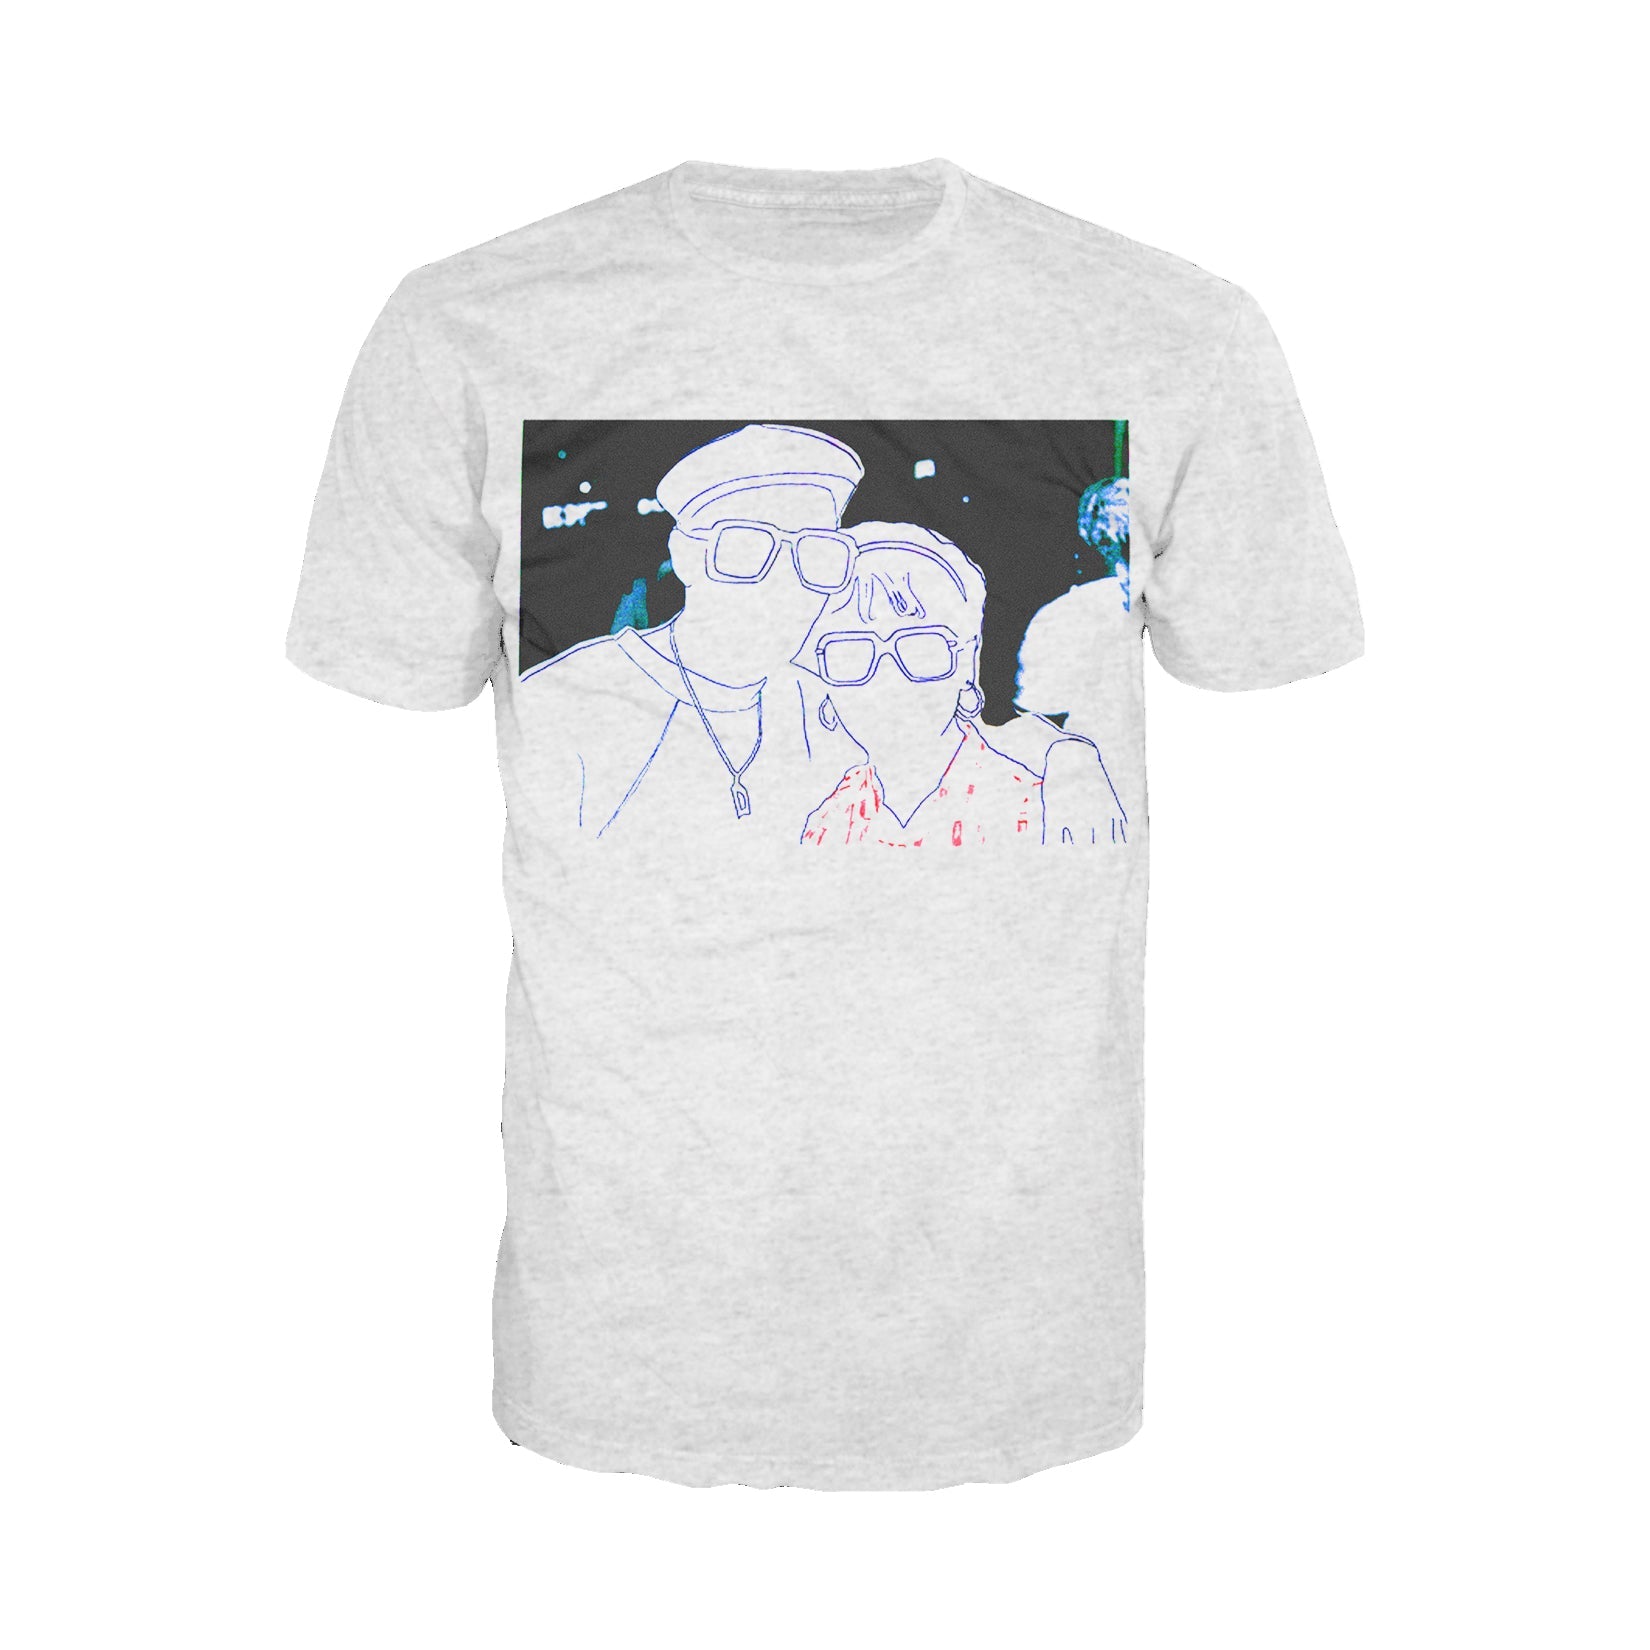 US Brand X Old's Kool Spec Amour Official Men's T-Shirt ()